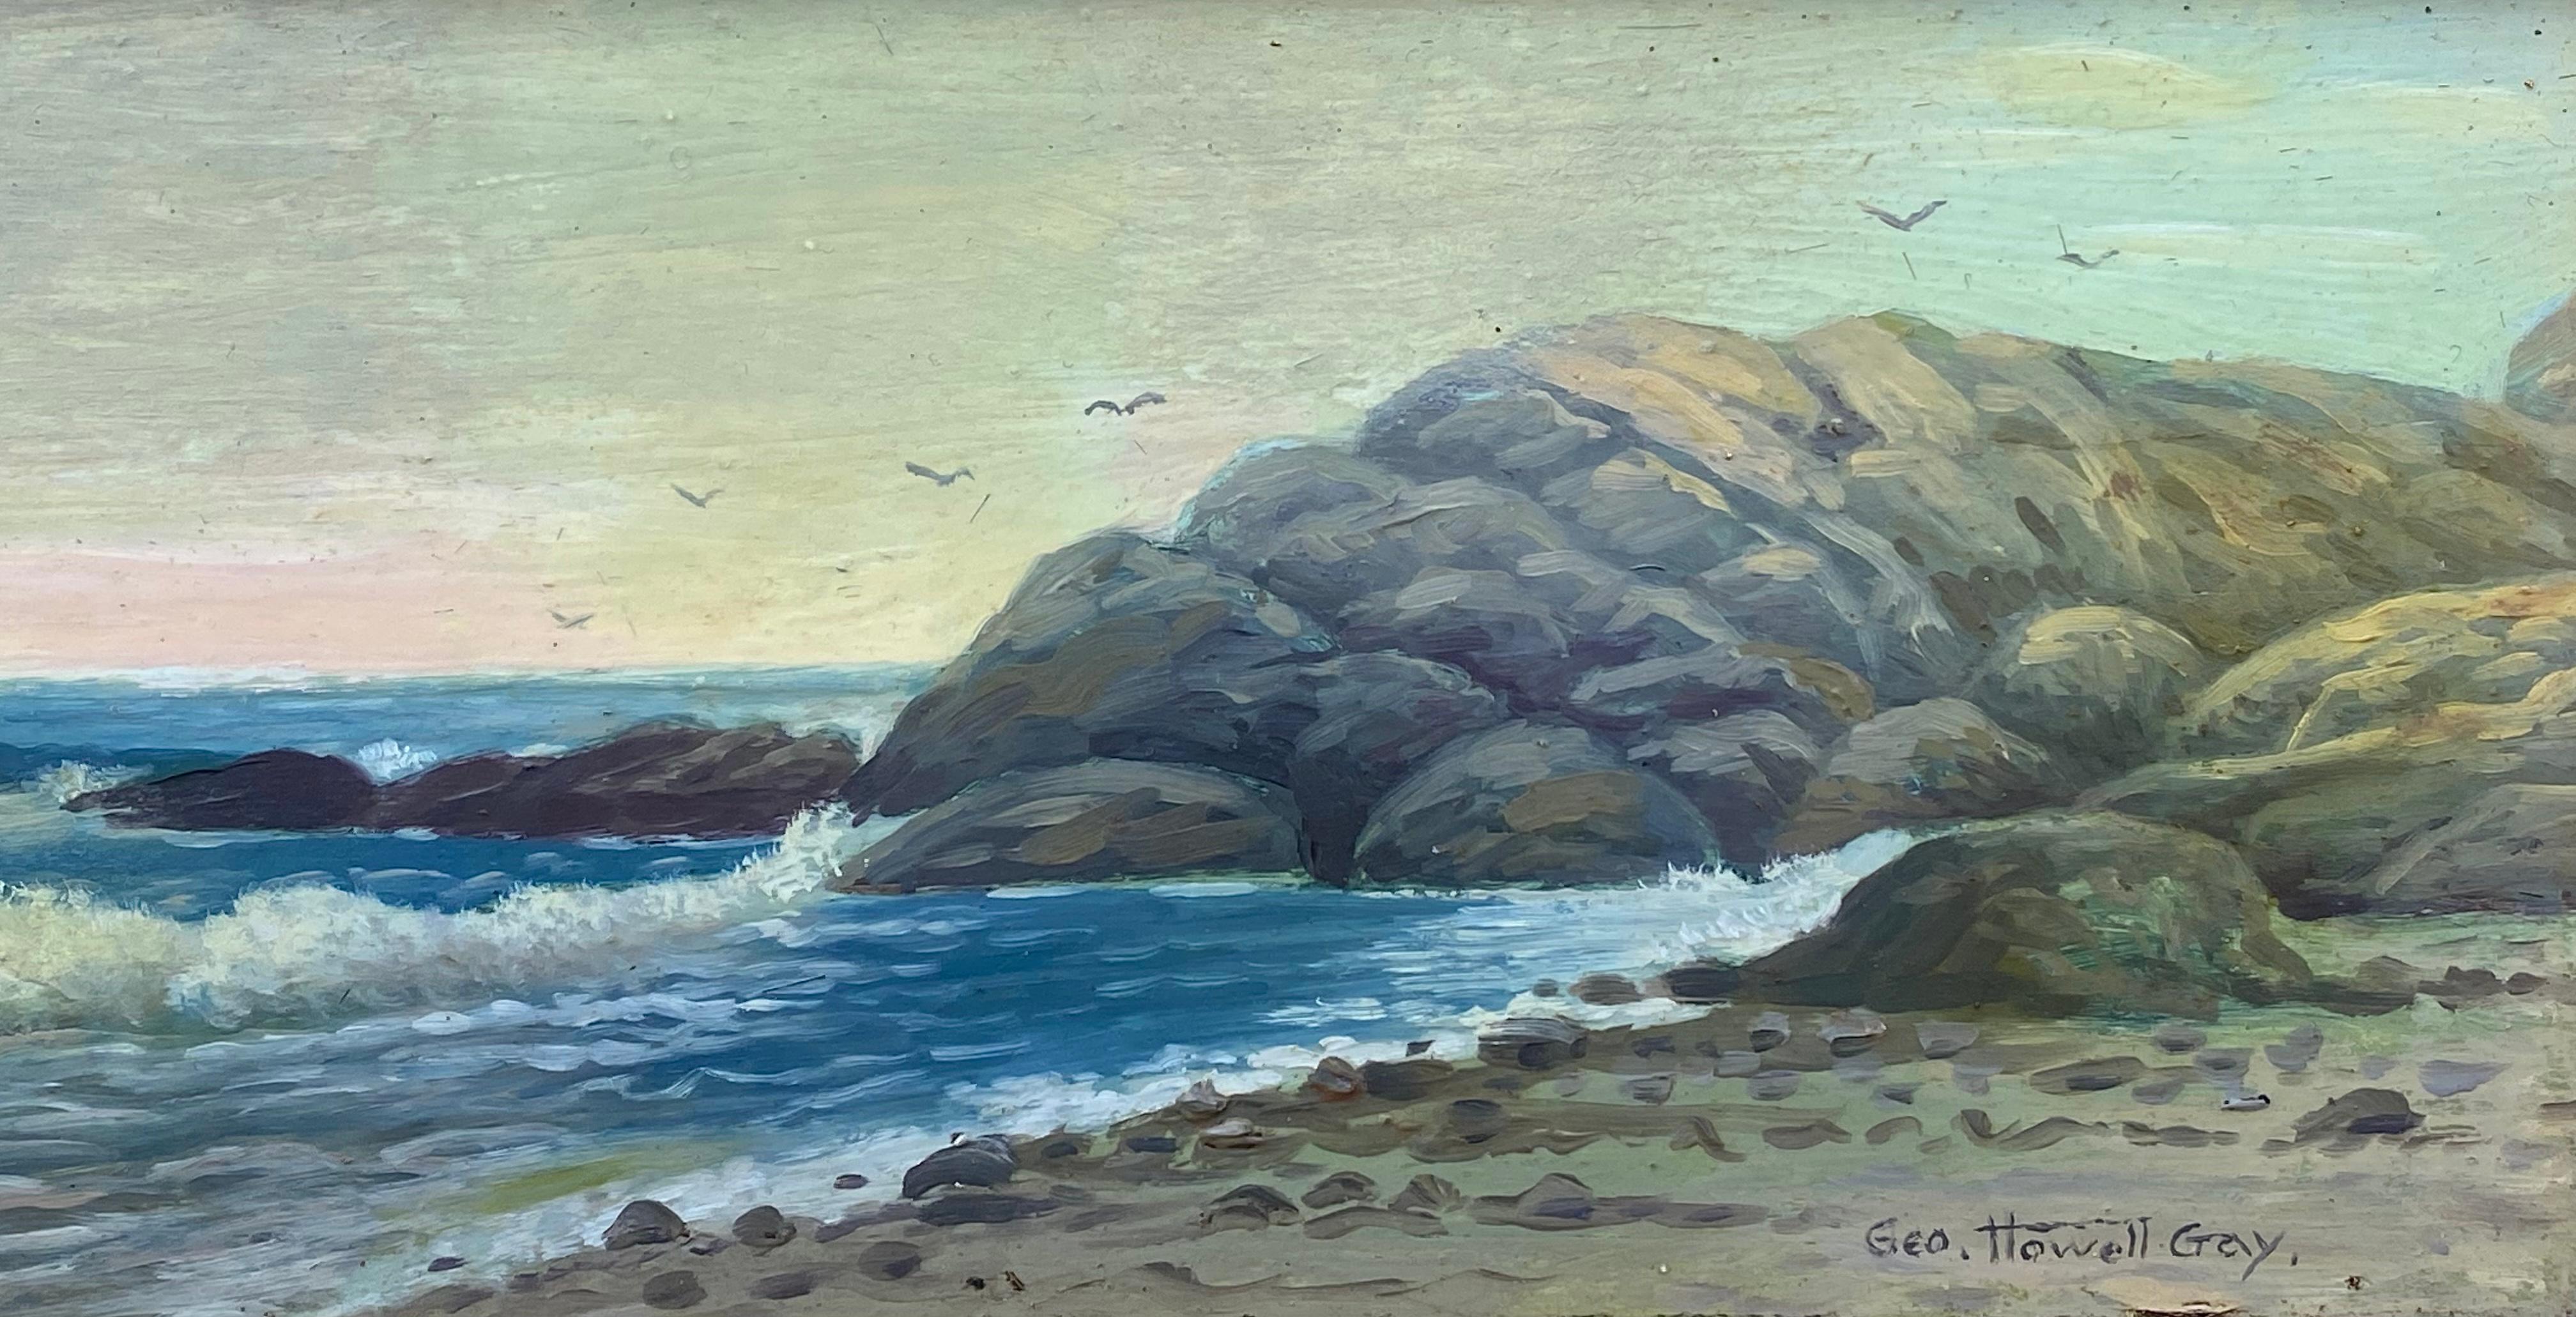 “Coastal Dawn” - Academic Painting by George Howell Gay